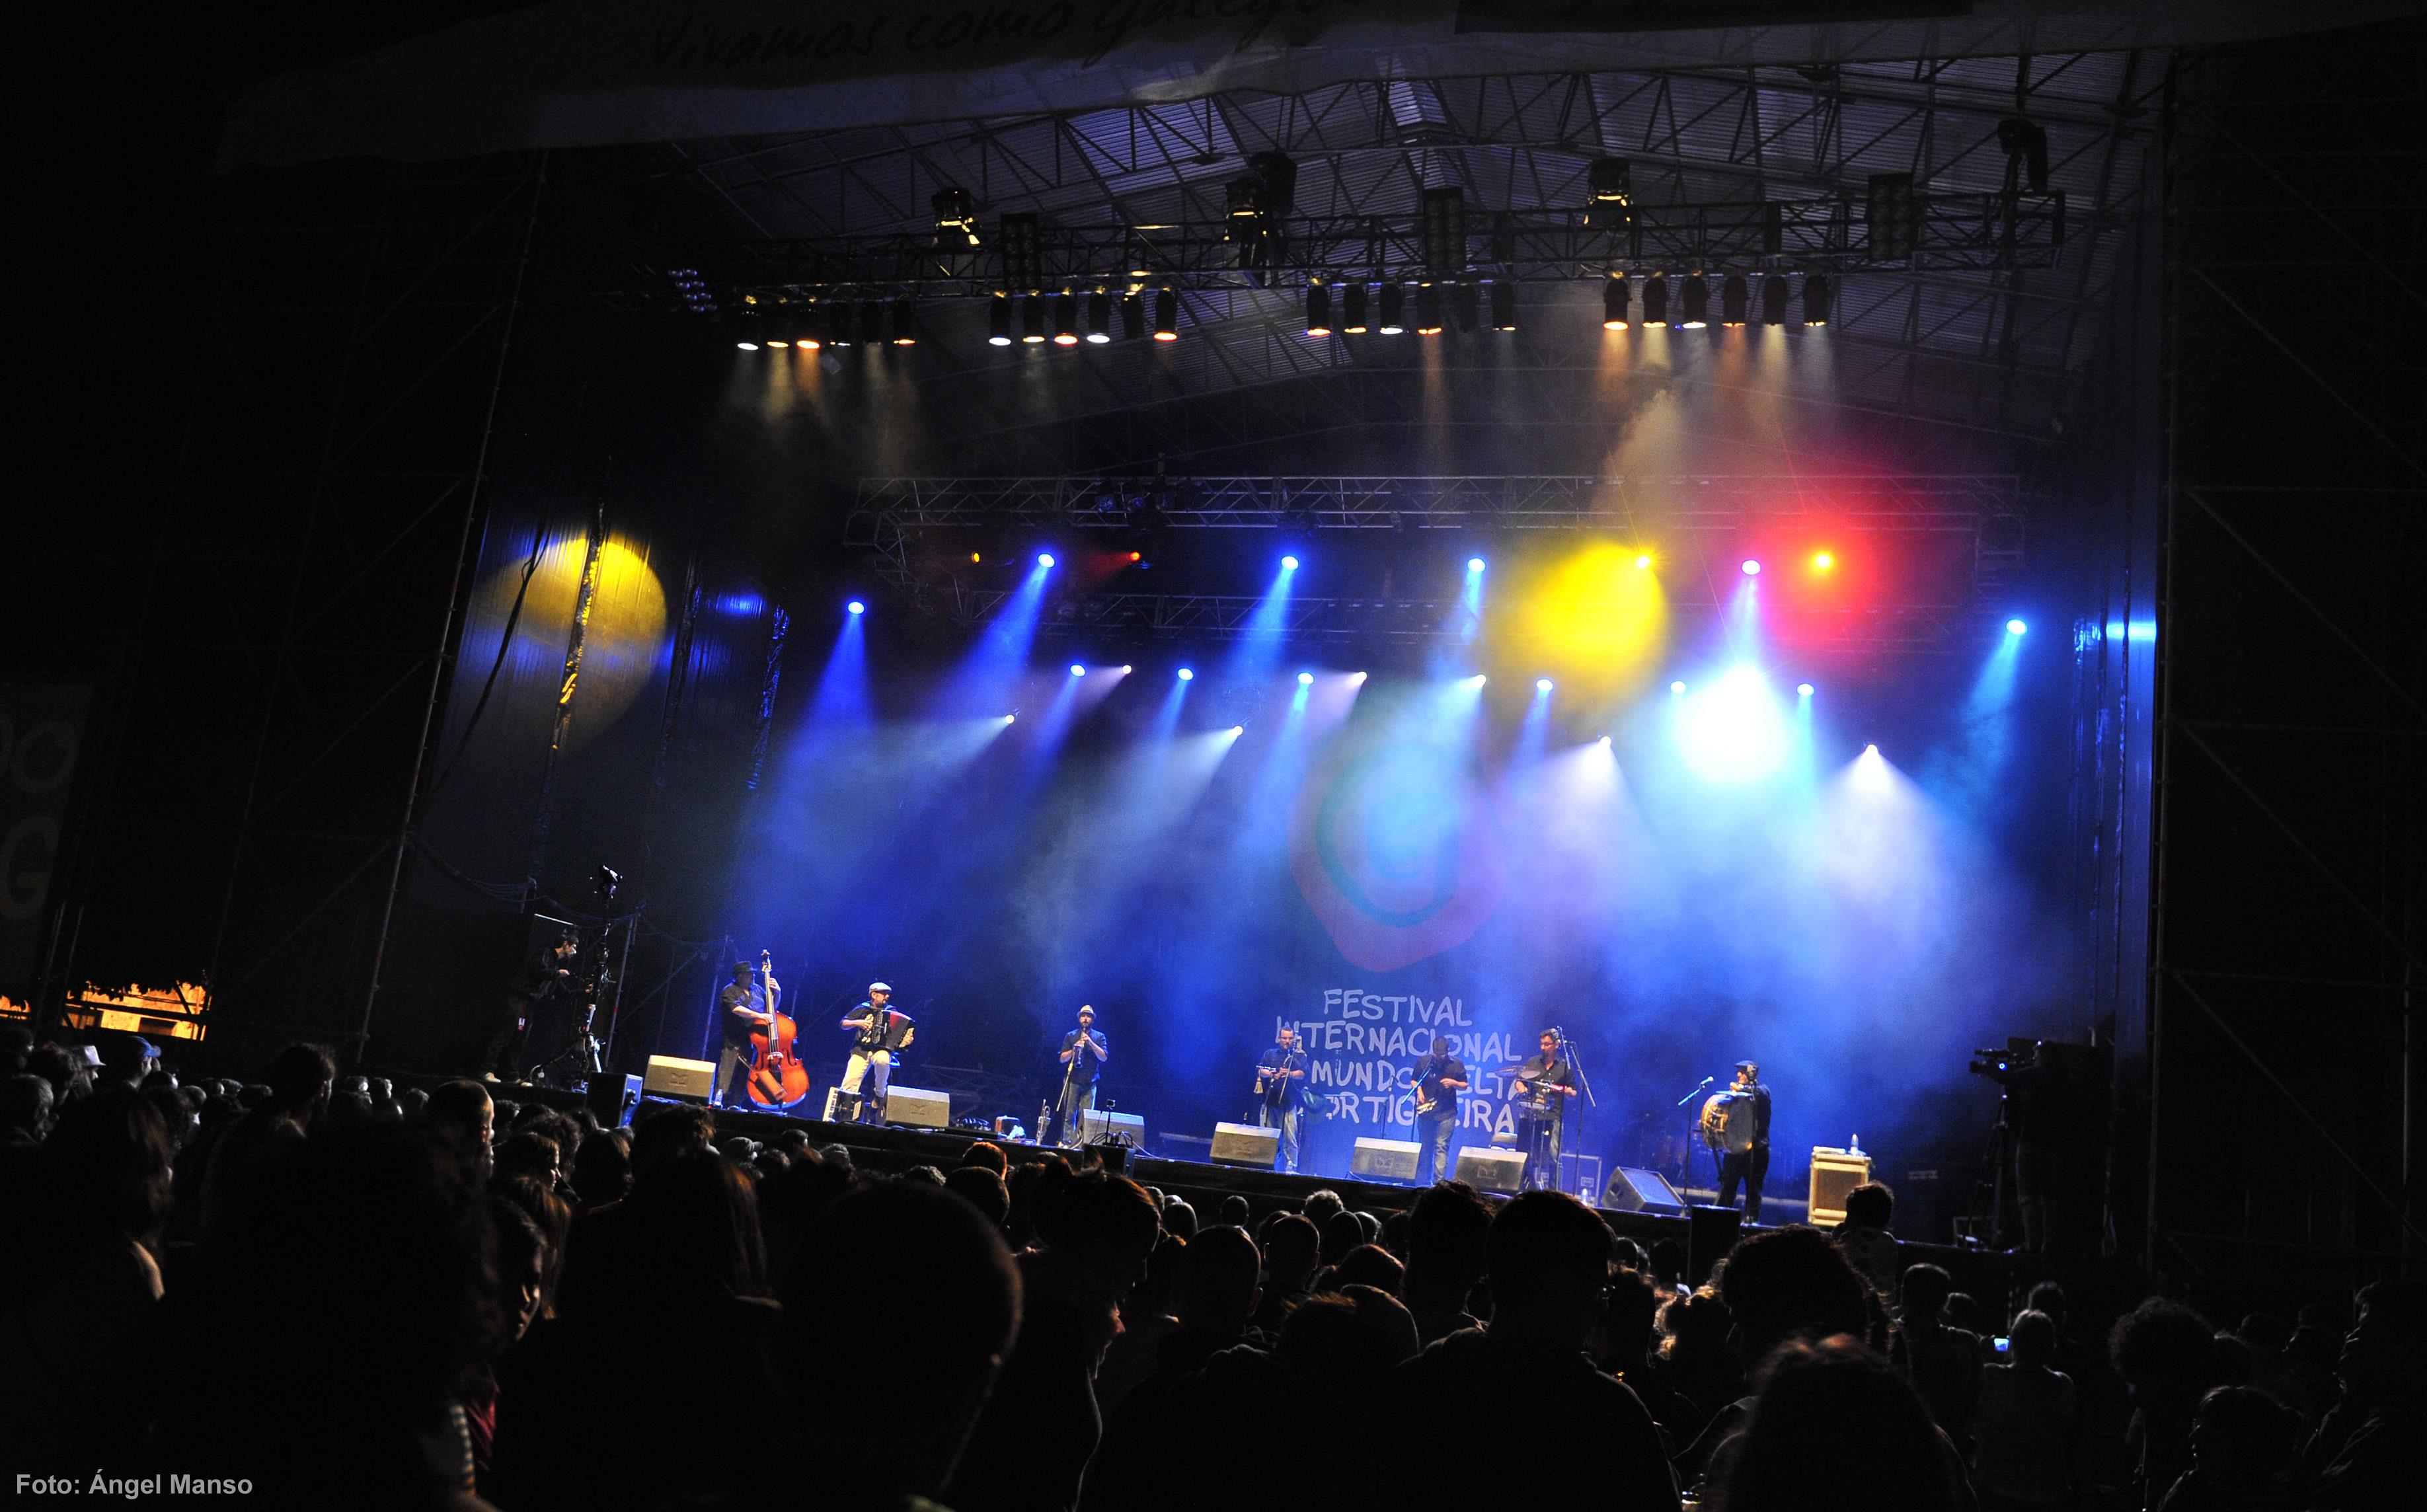 Festival Internacional do Mundo Celta de Ortigueira 2014